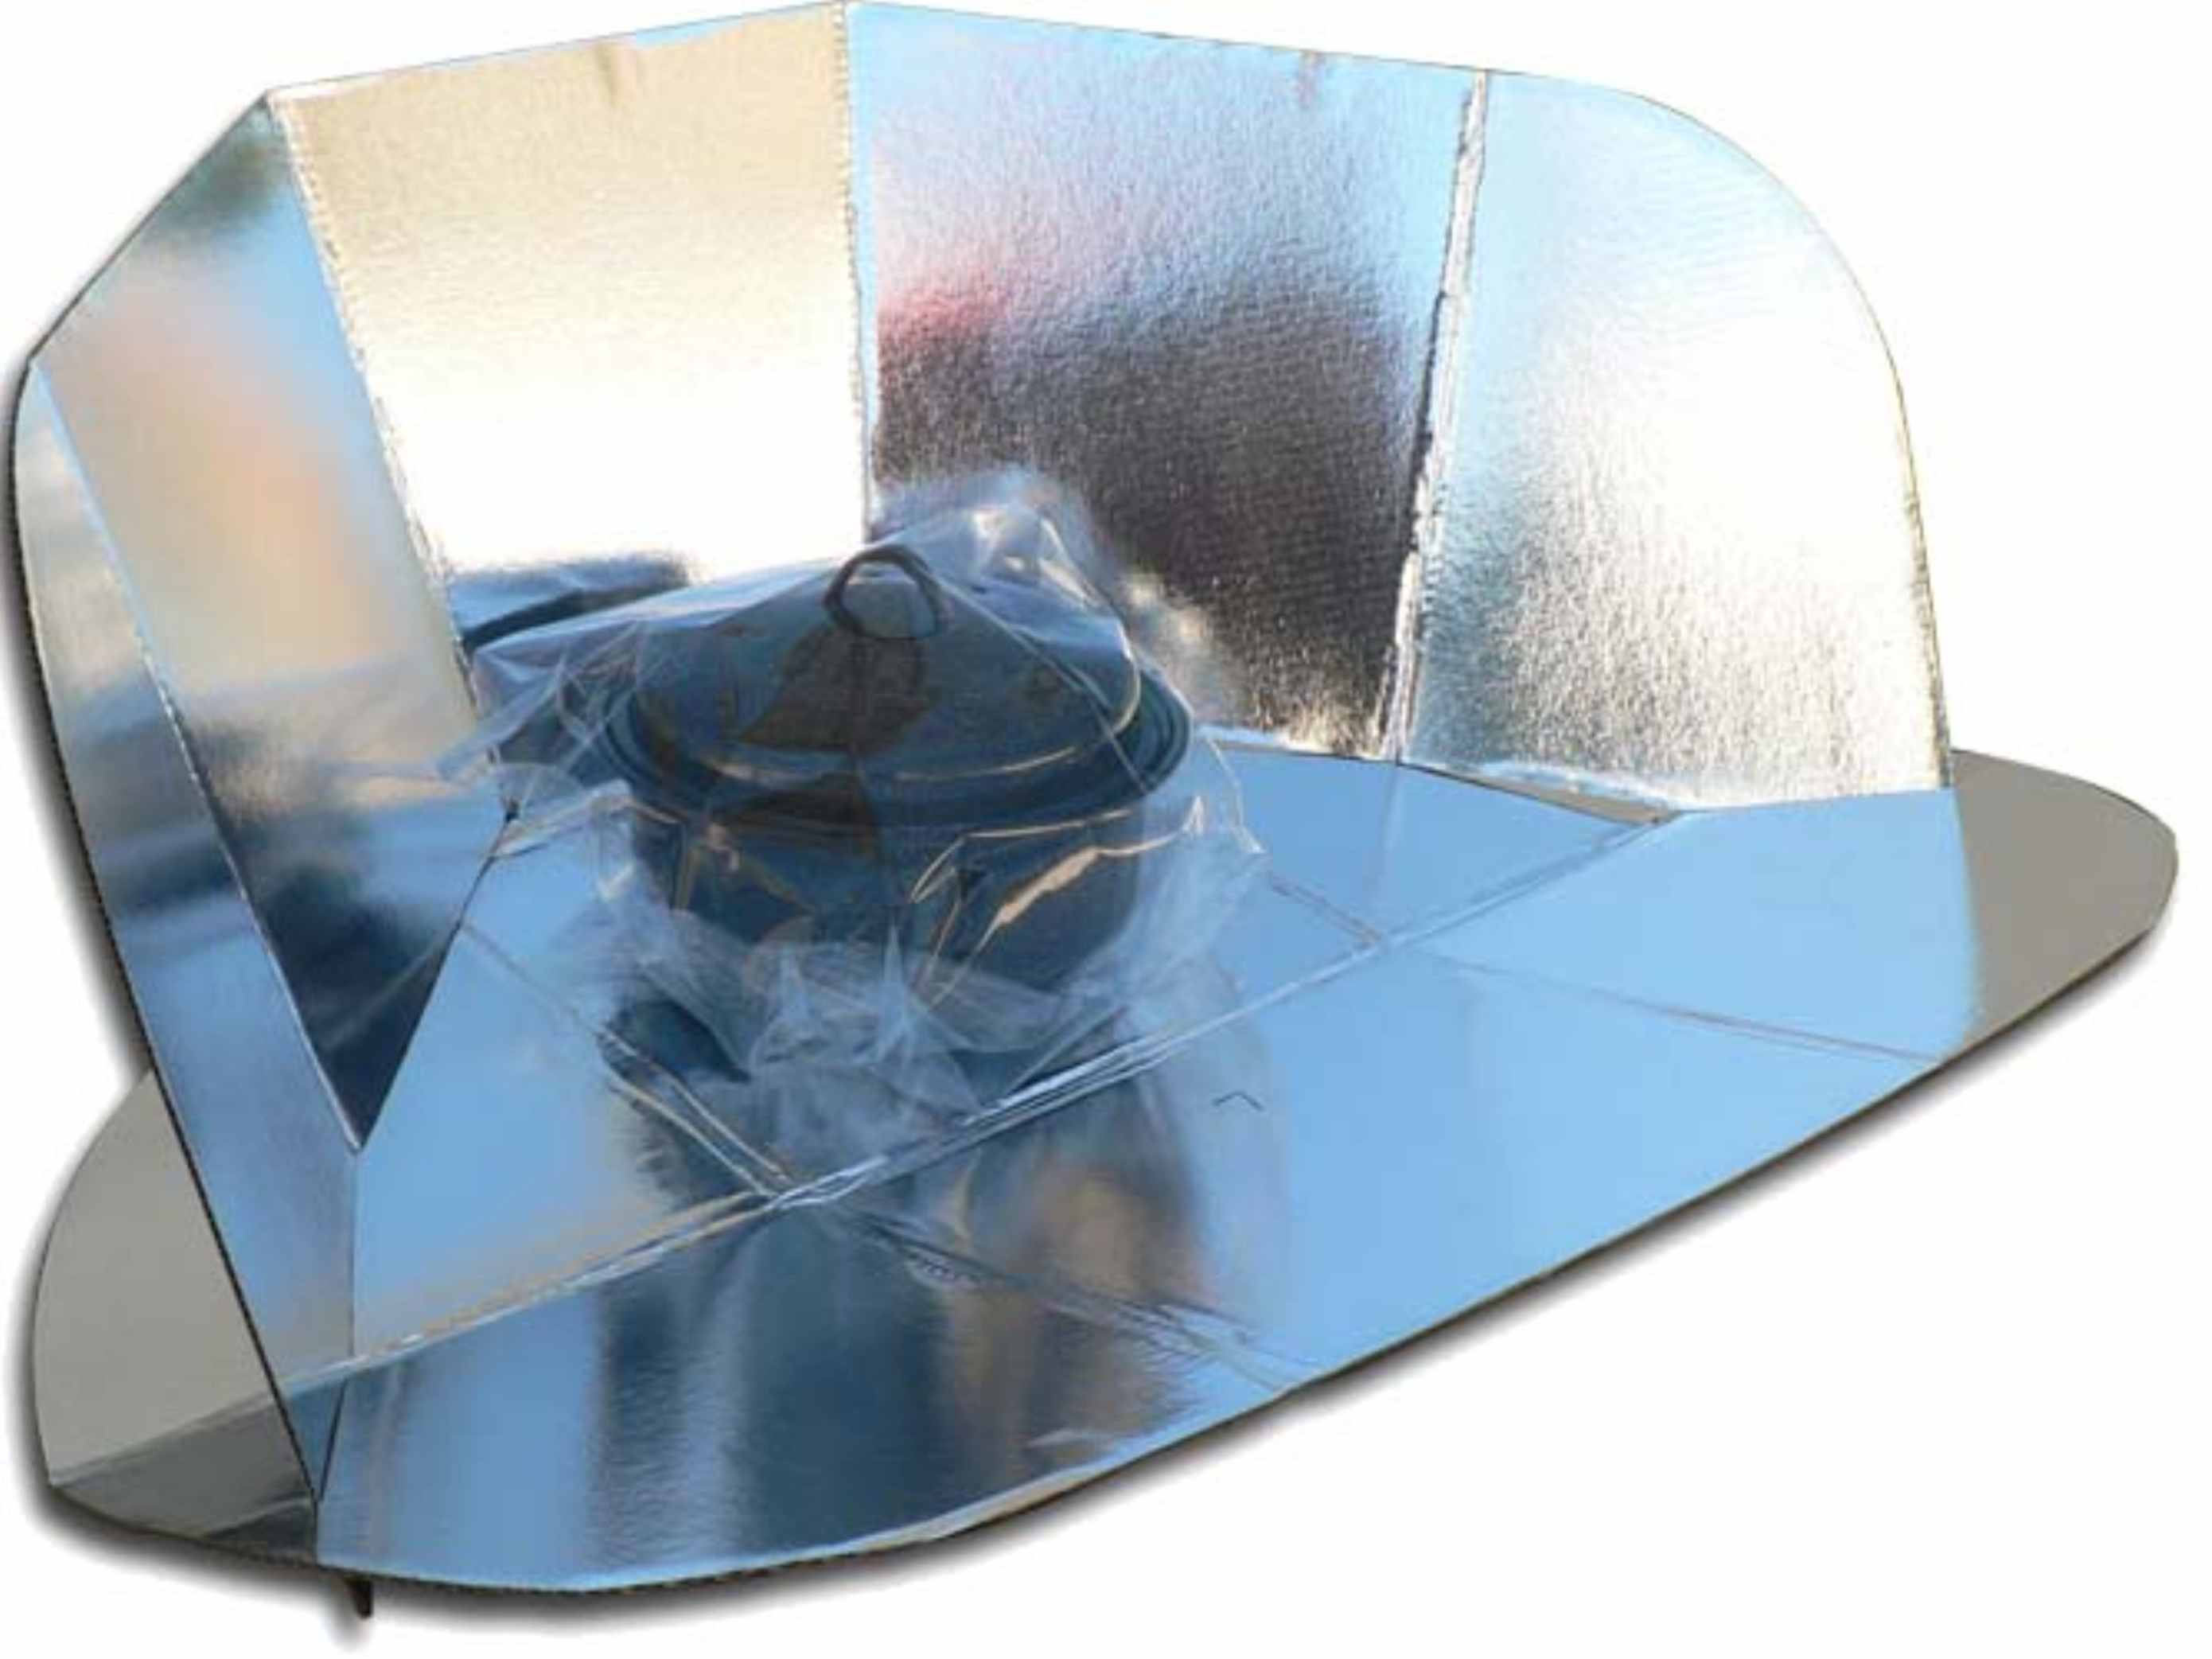 Solar cooker - Wikipedia